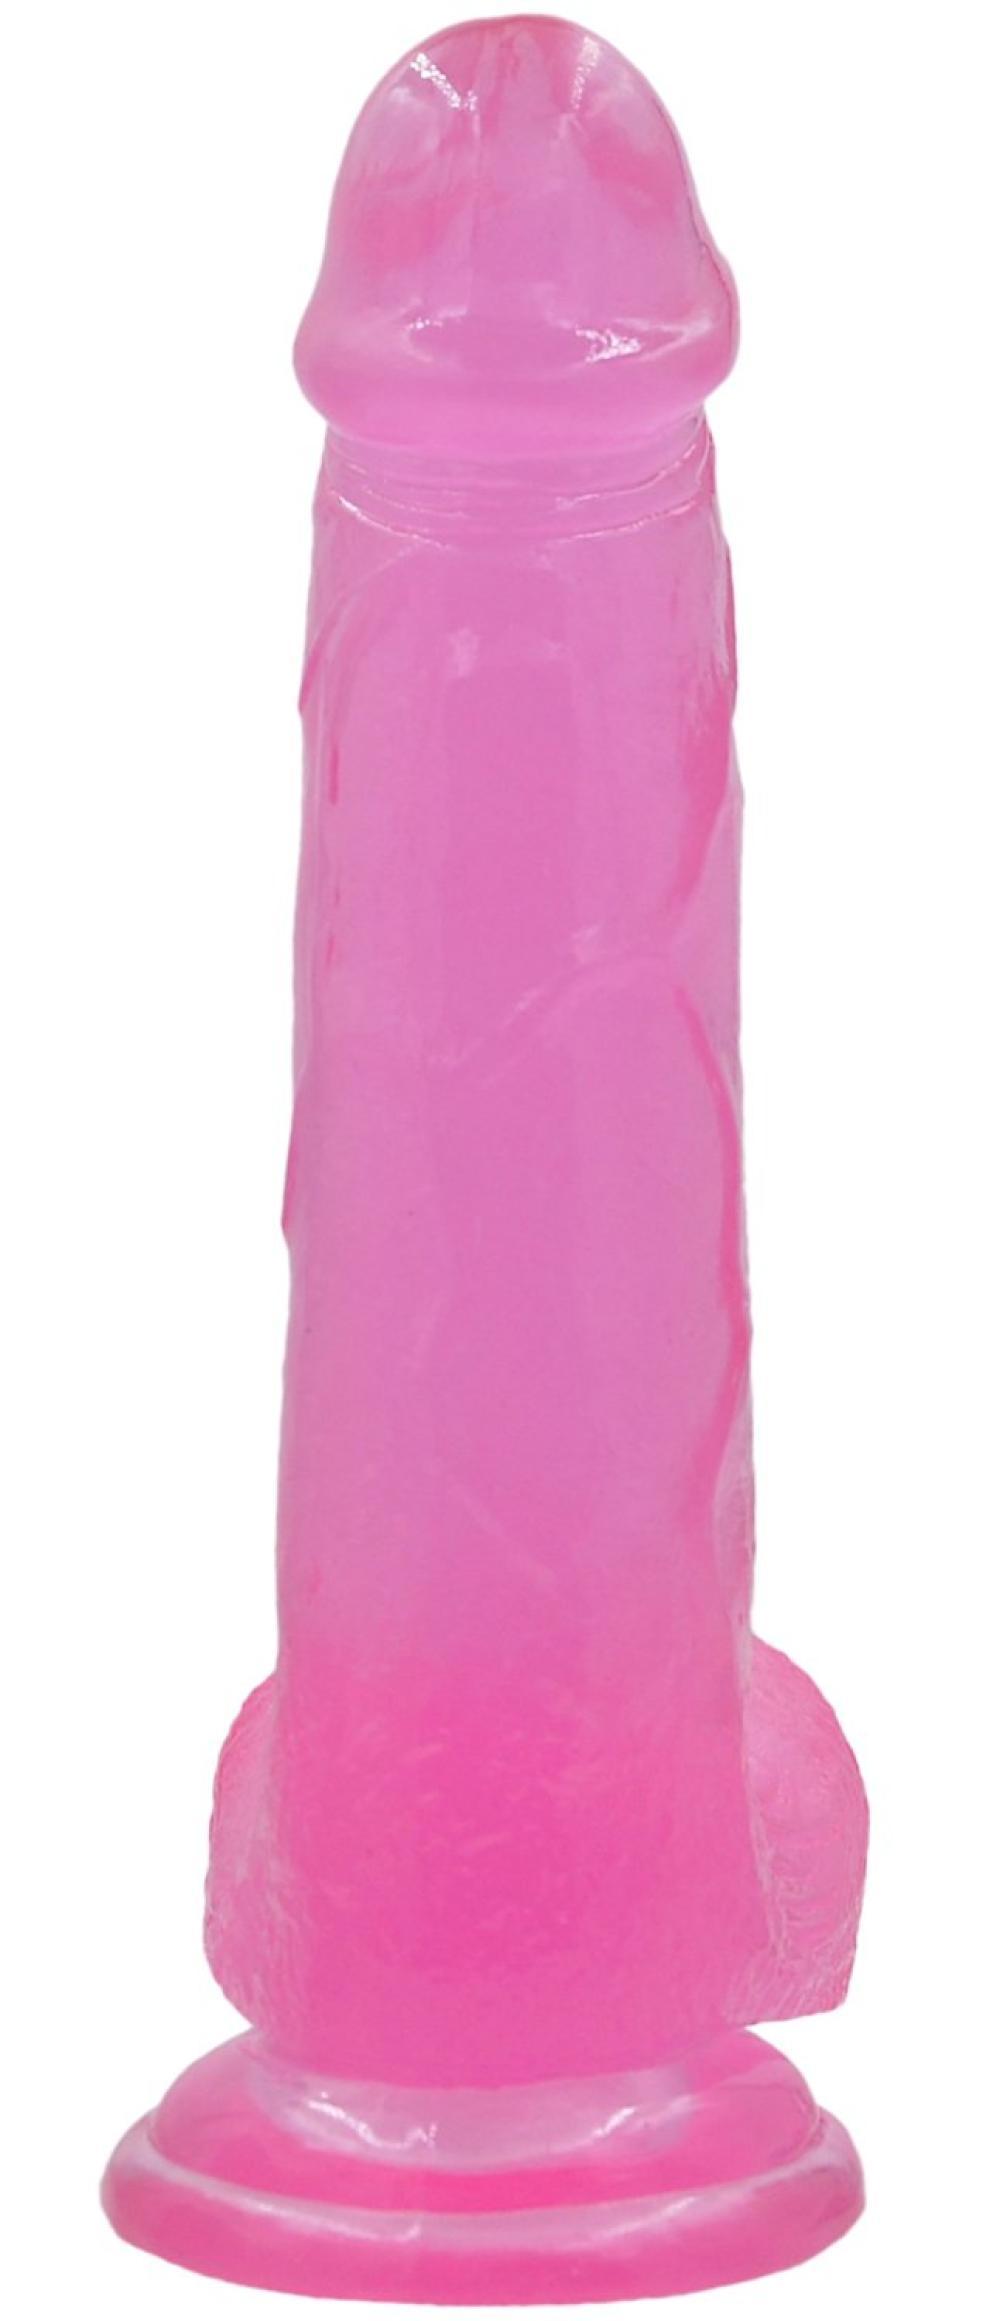 20 CM Jel Dokulu Yumuşak Dildo Penis - Jelly Studs Crystal Dildo Large